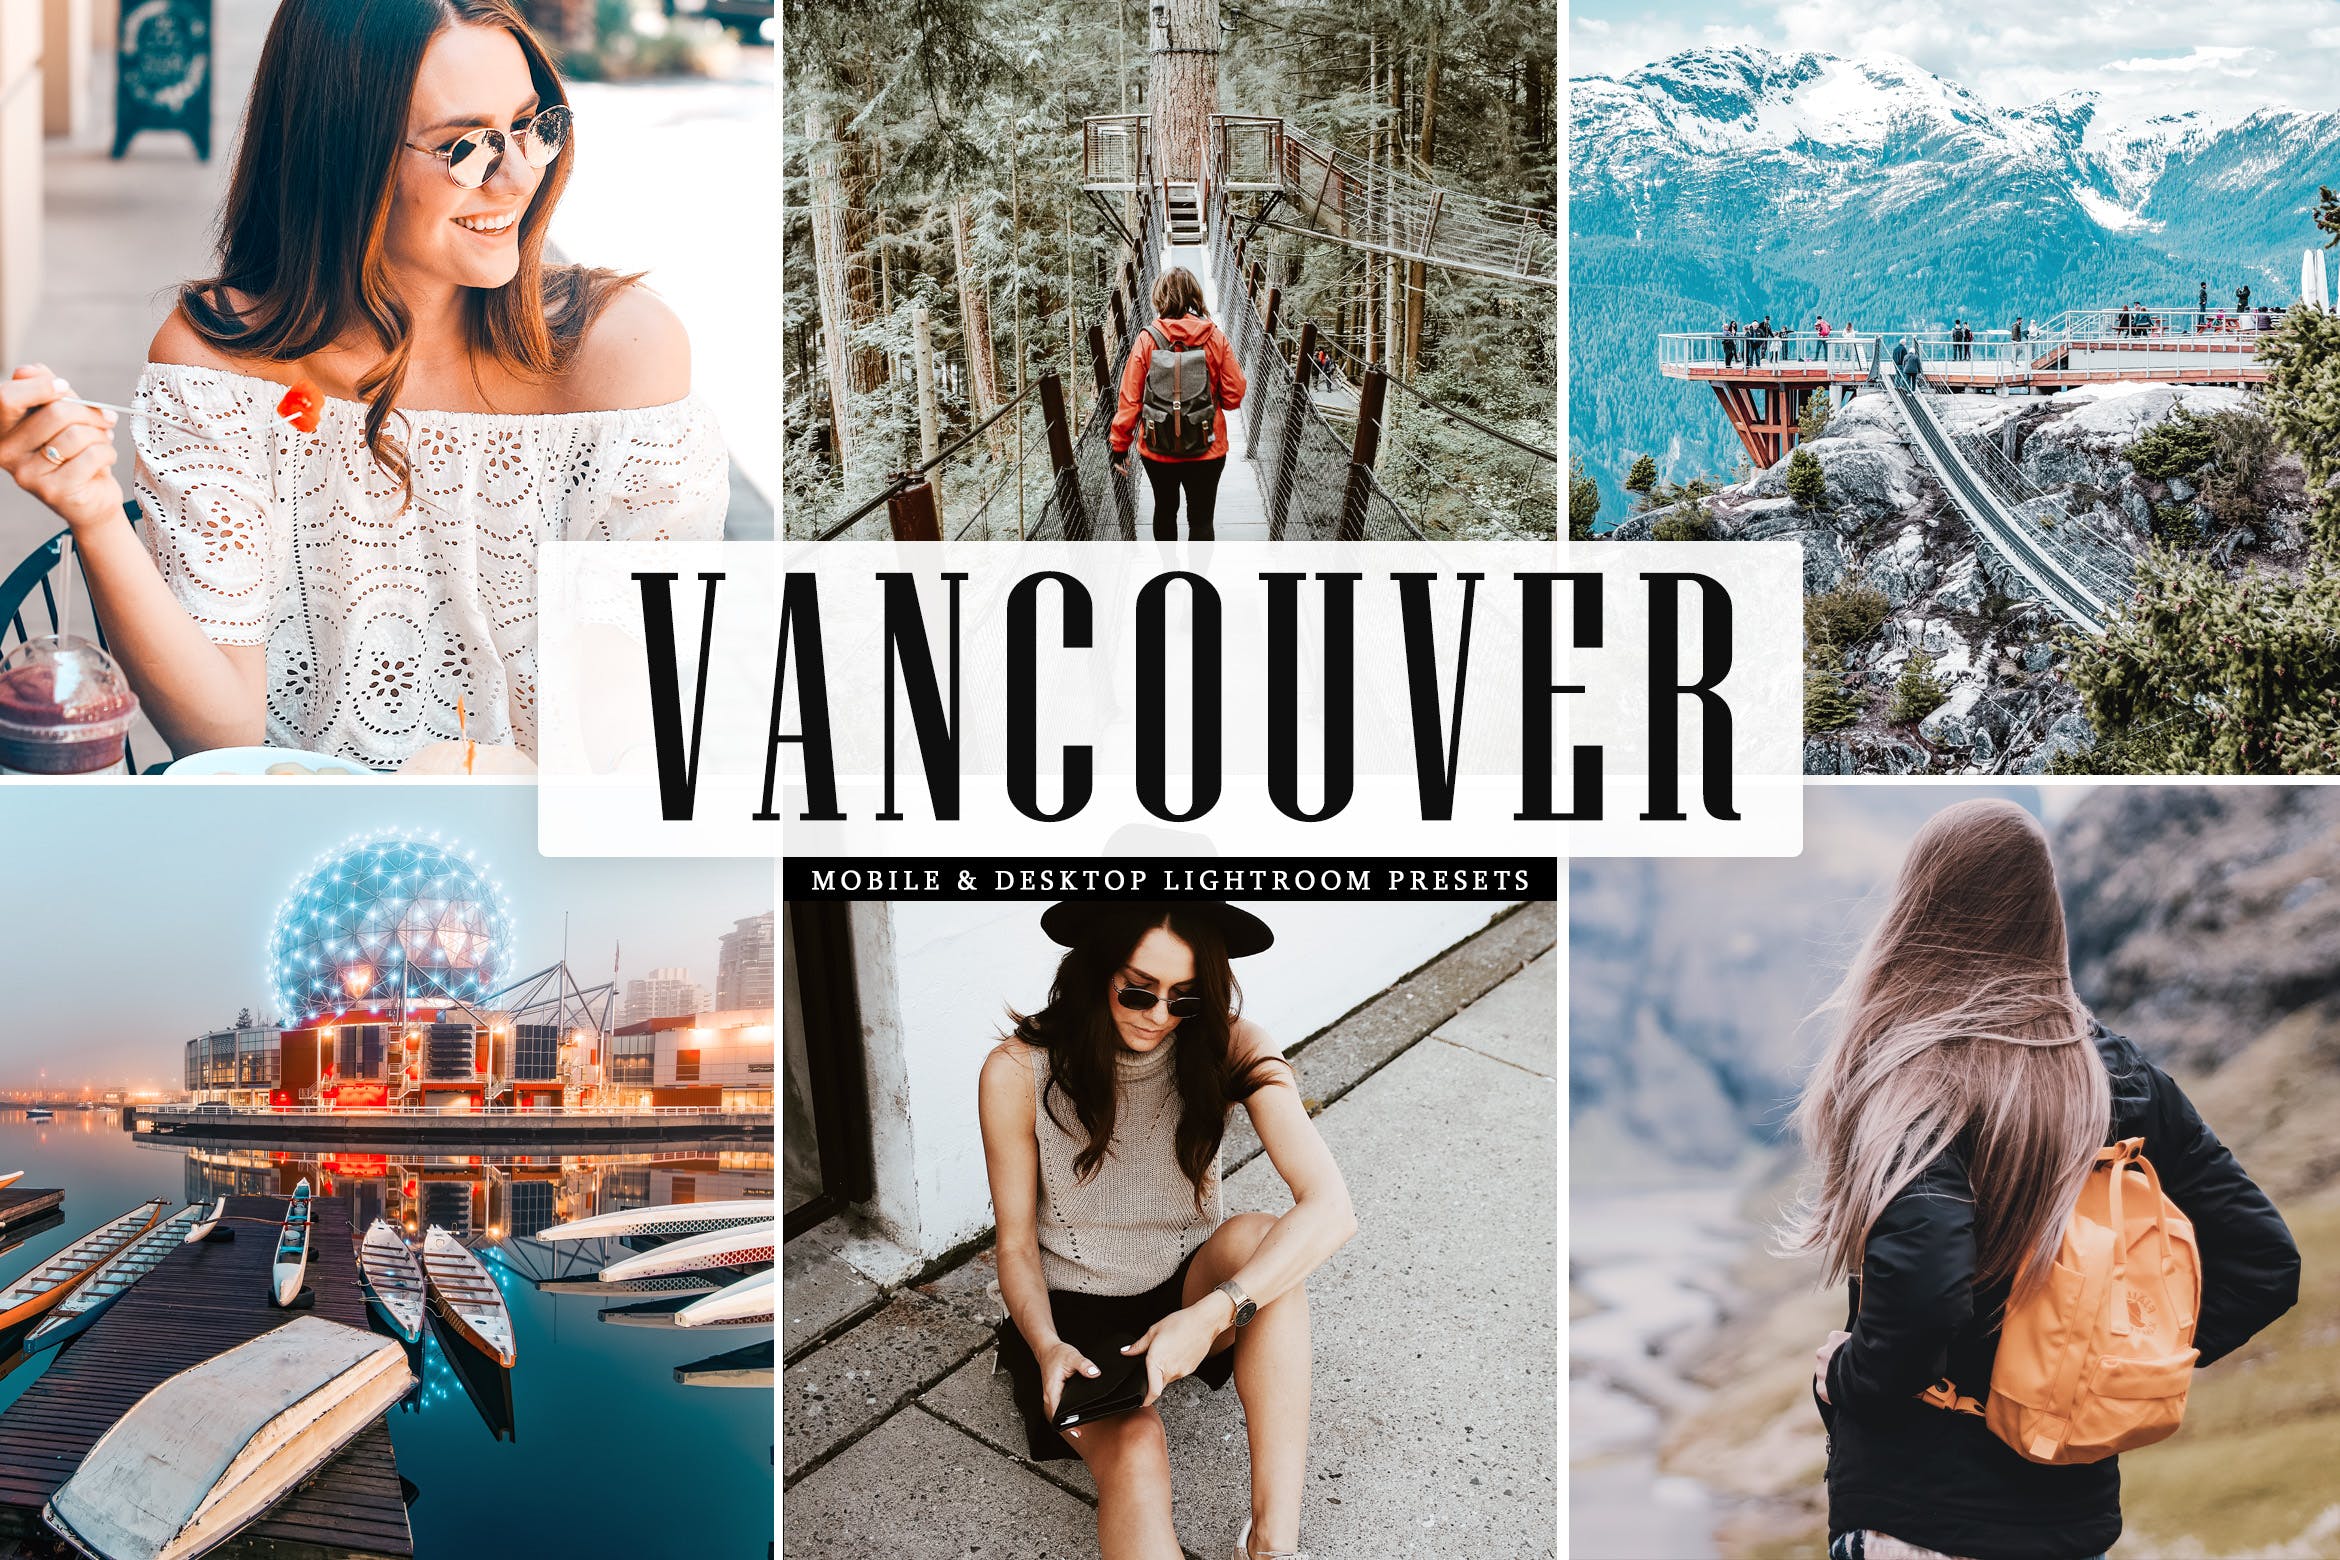 加拿大旅行摄影照片后期处理Lightroom调色预设 Vancouver Mobile & Desktop Lightroom Presets插图